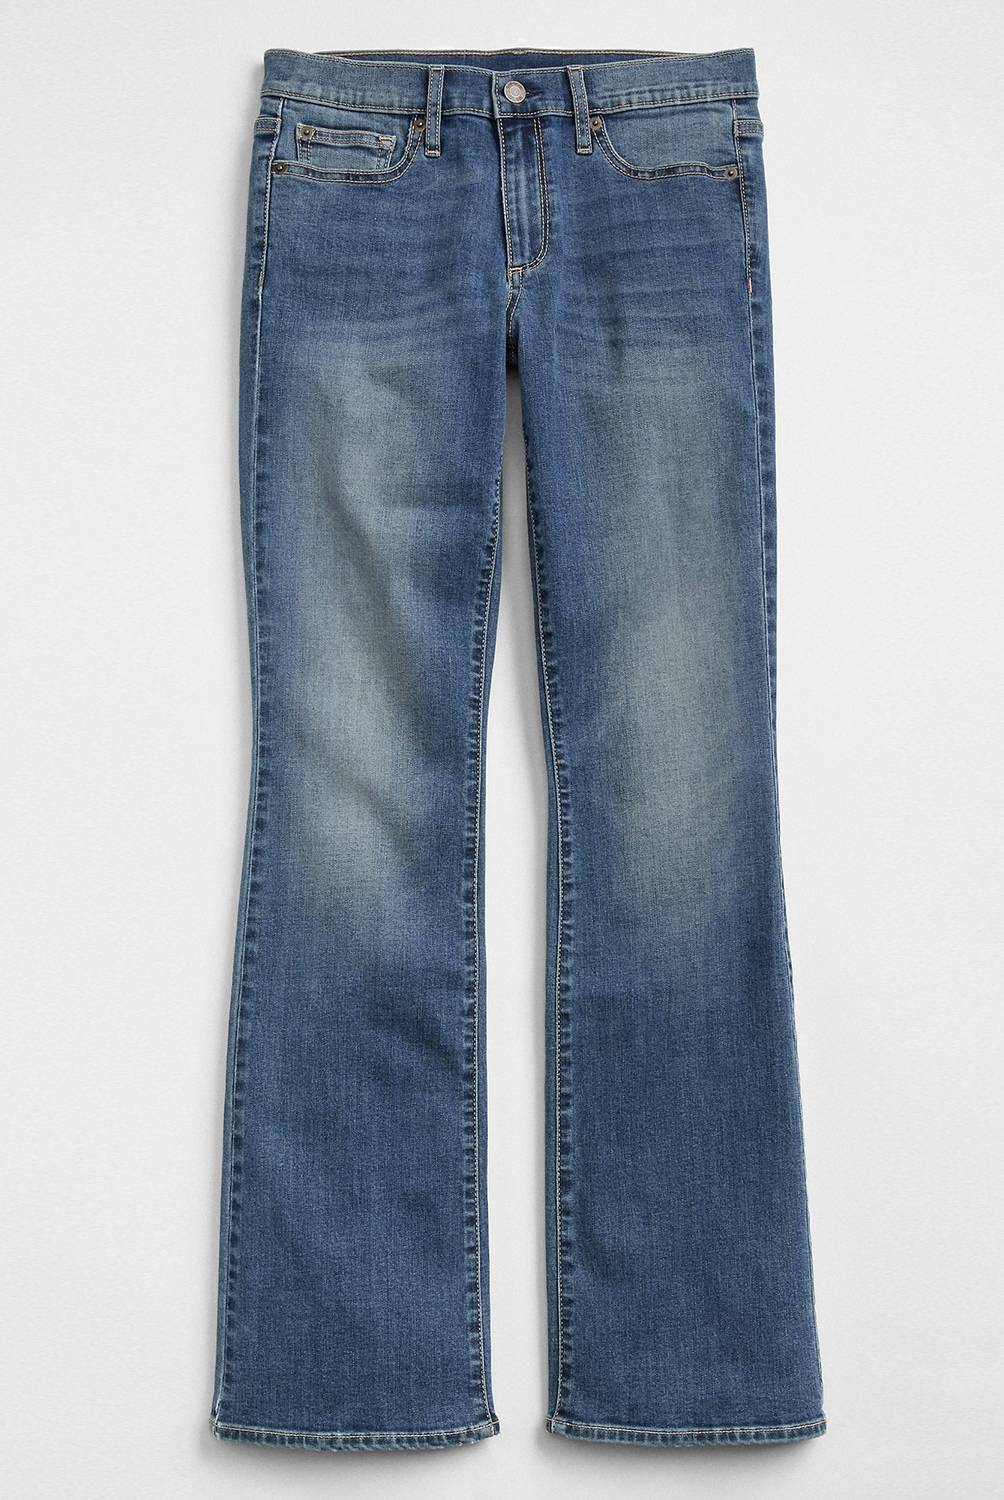 Gap - Jeans